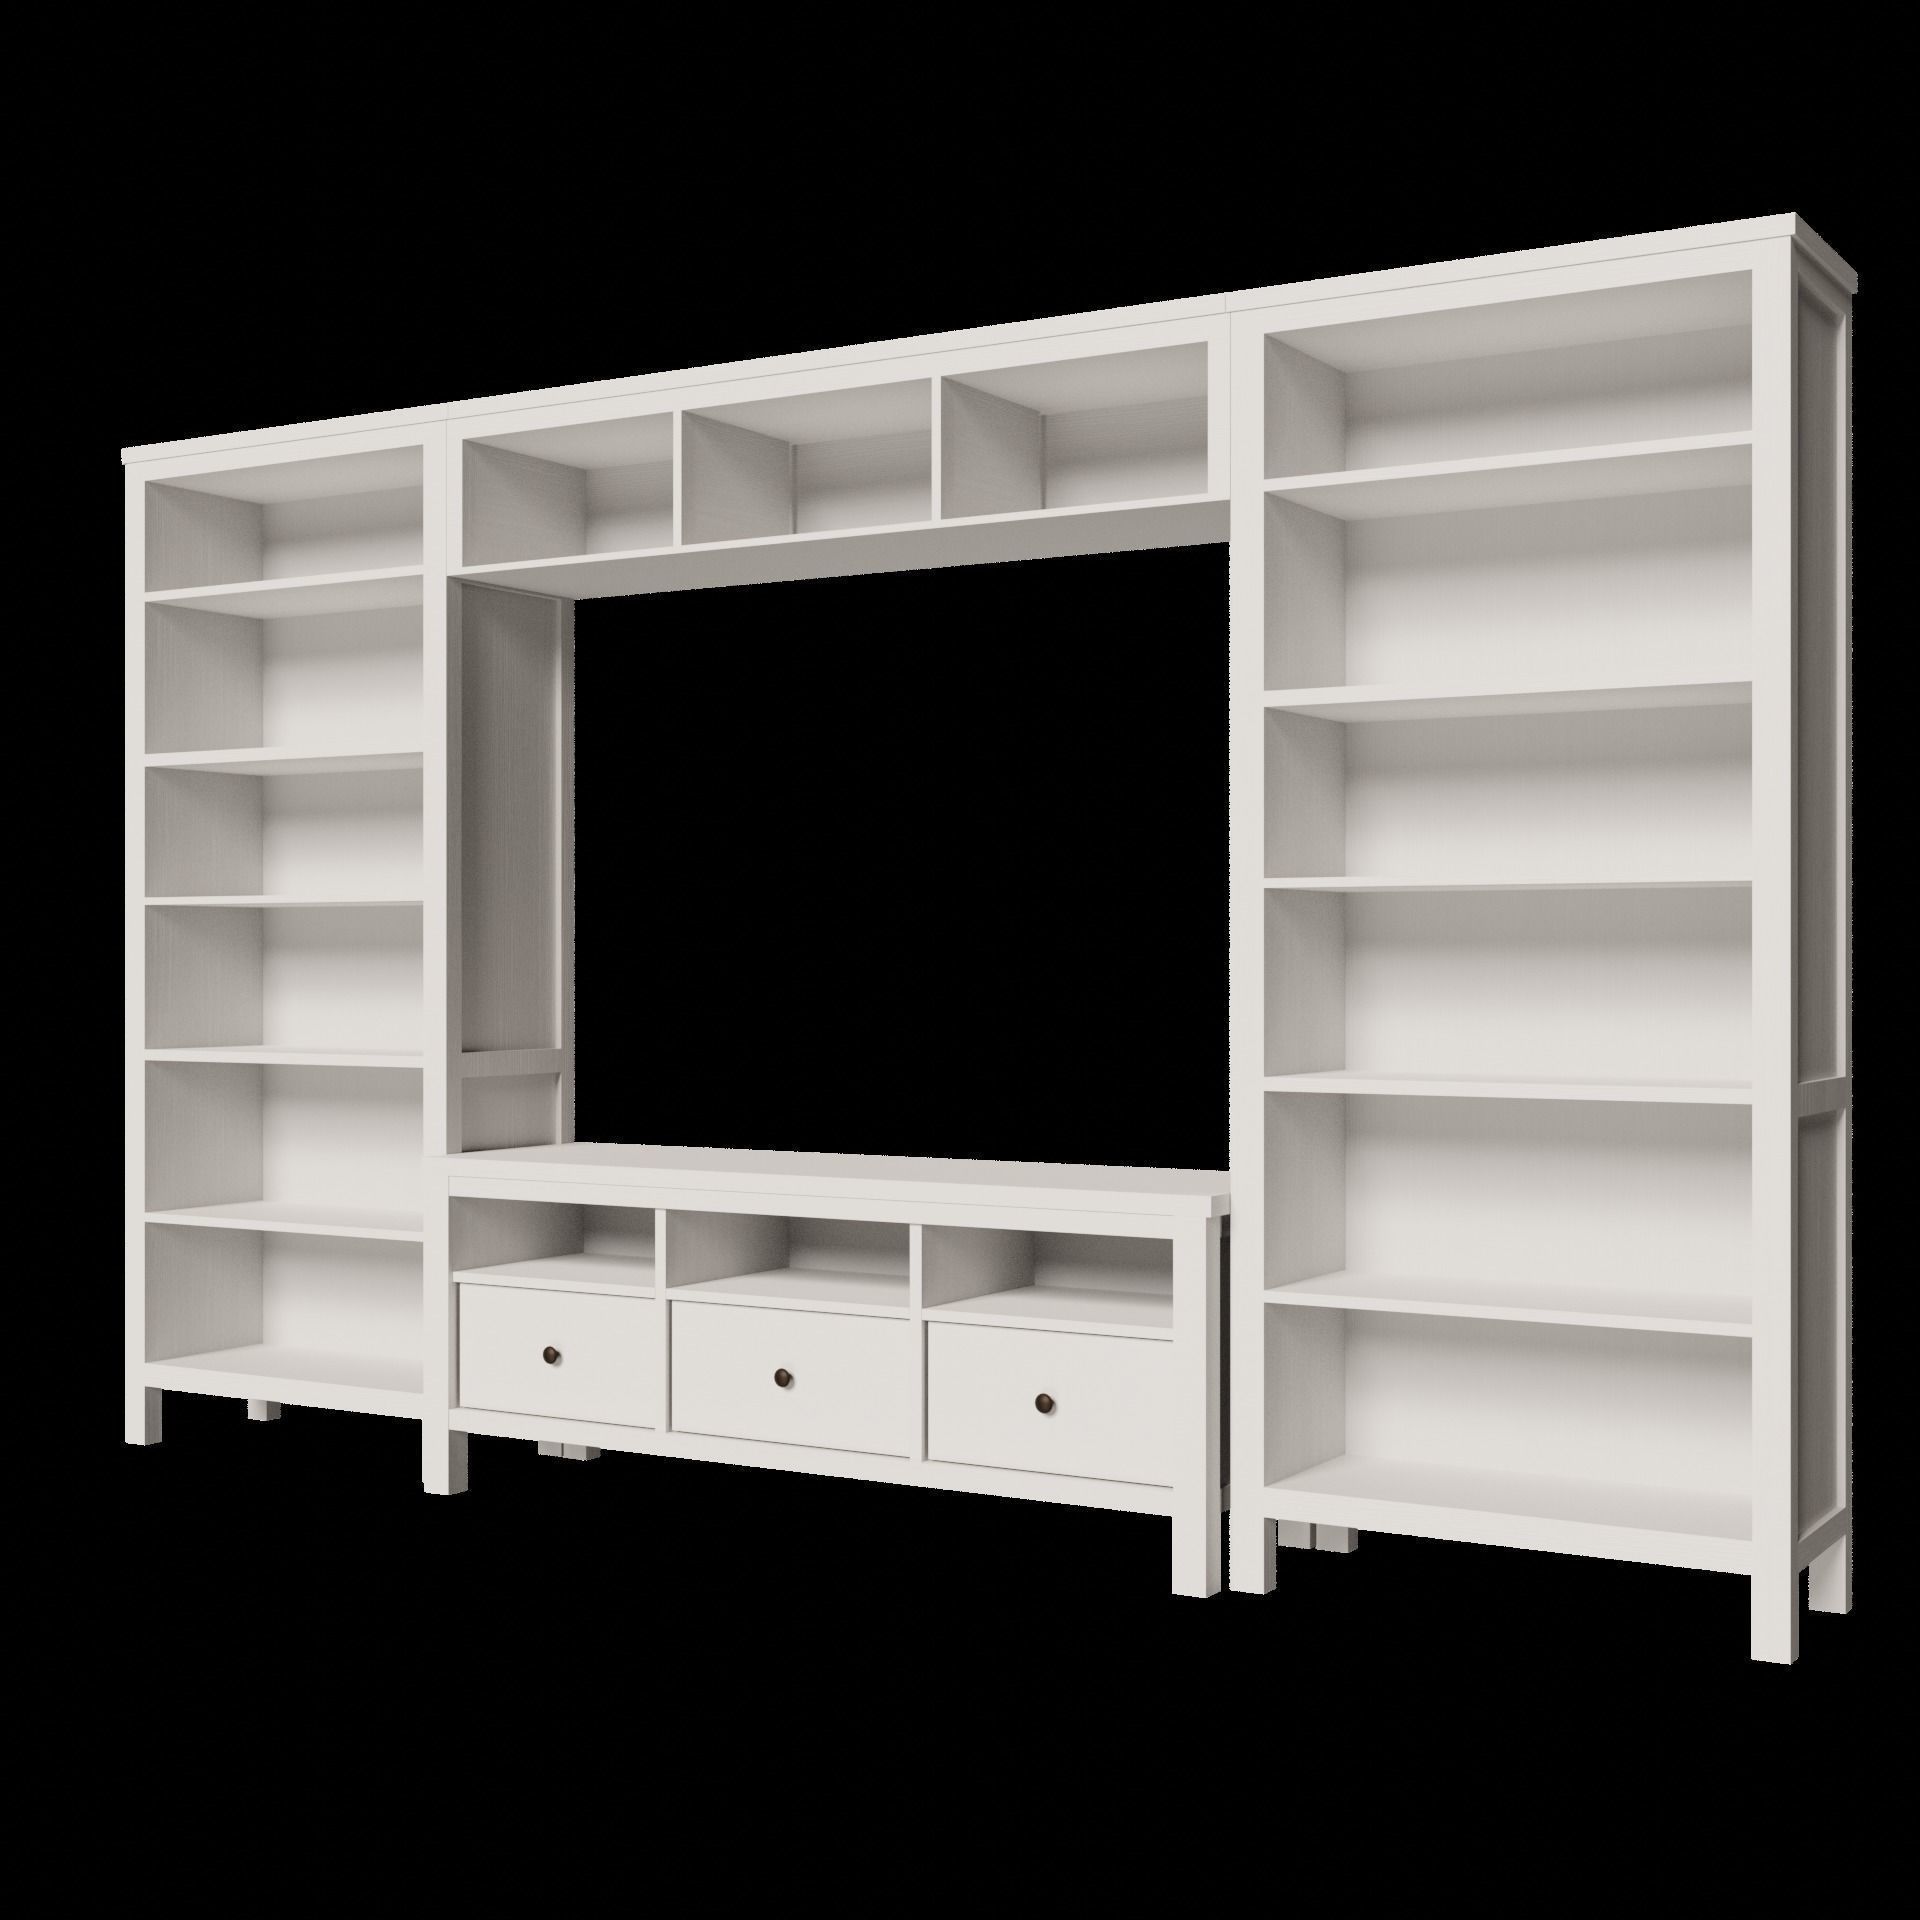 3d Model Ikea Hemnes Tv Storage Unit Cabinets Shelfs 2 Intended For Corner Units For Tv Ikea (View 5 of 15)